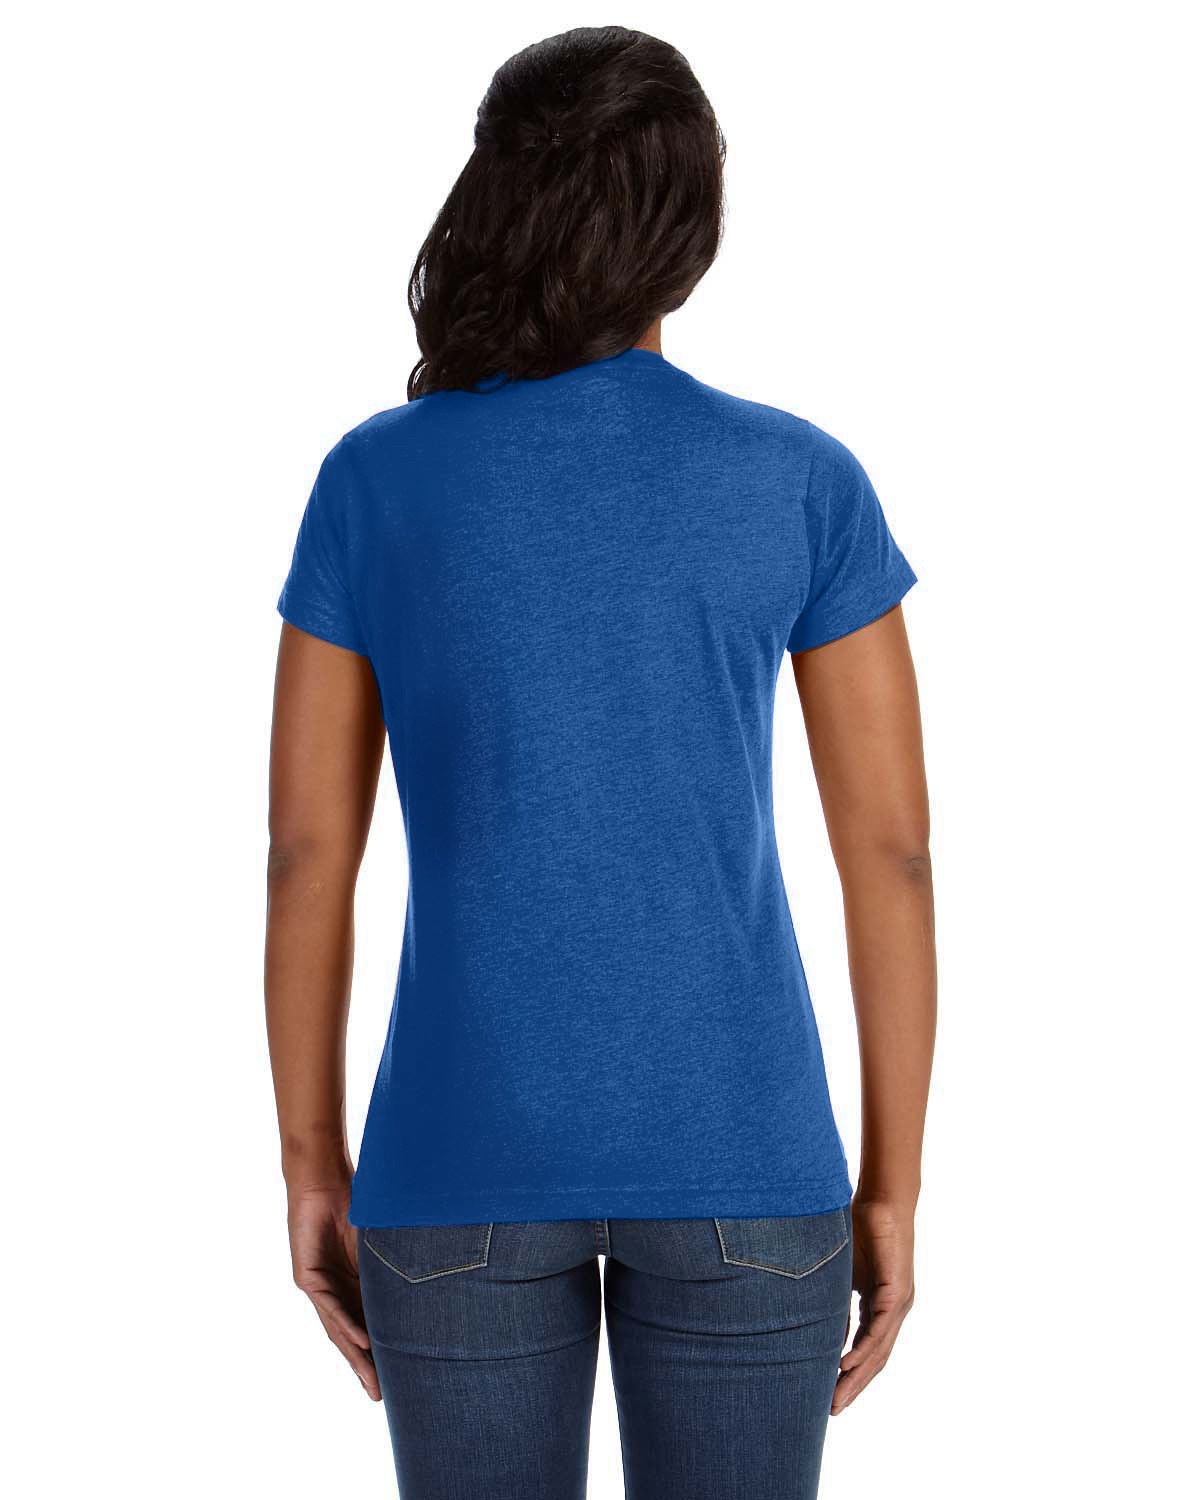 'LAT 3505 Ladies' Vintage Fine Jersey T-Shirt'